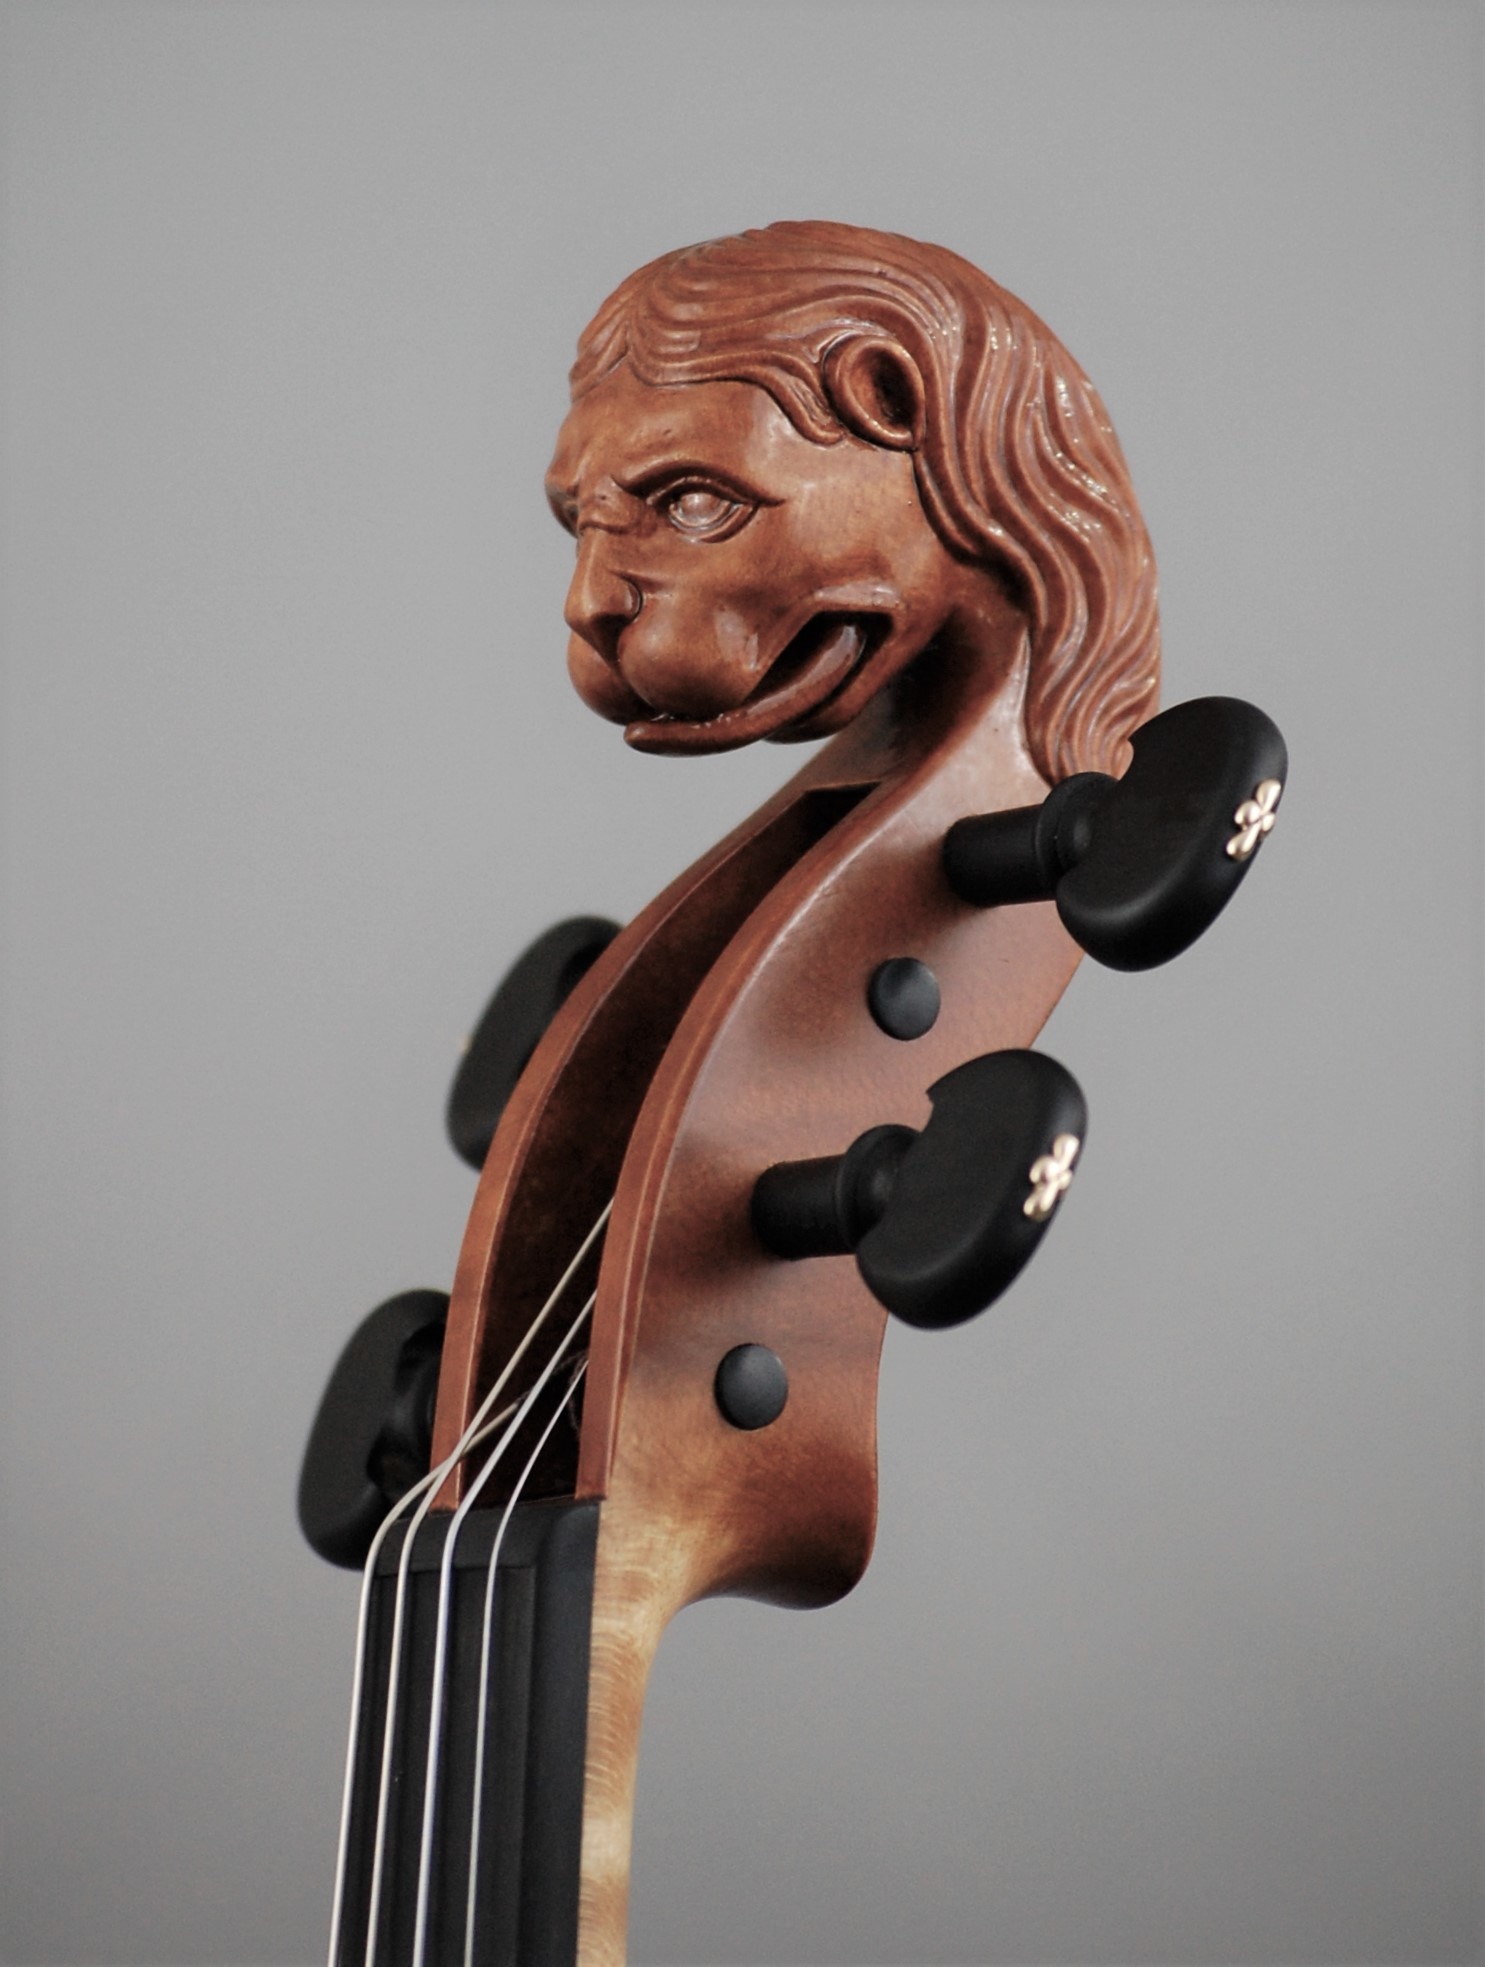 Joseph Liteh Liu violin with lion's head scroll, 2021, fecit Kansas City, Missouri, USA